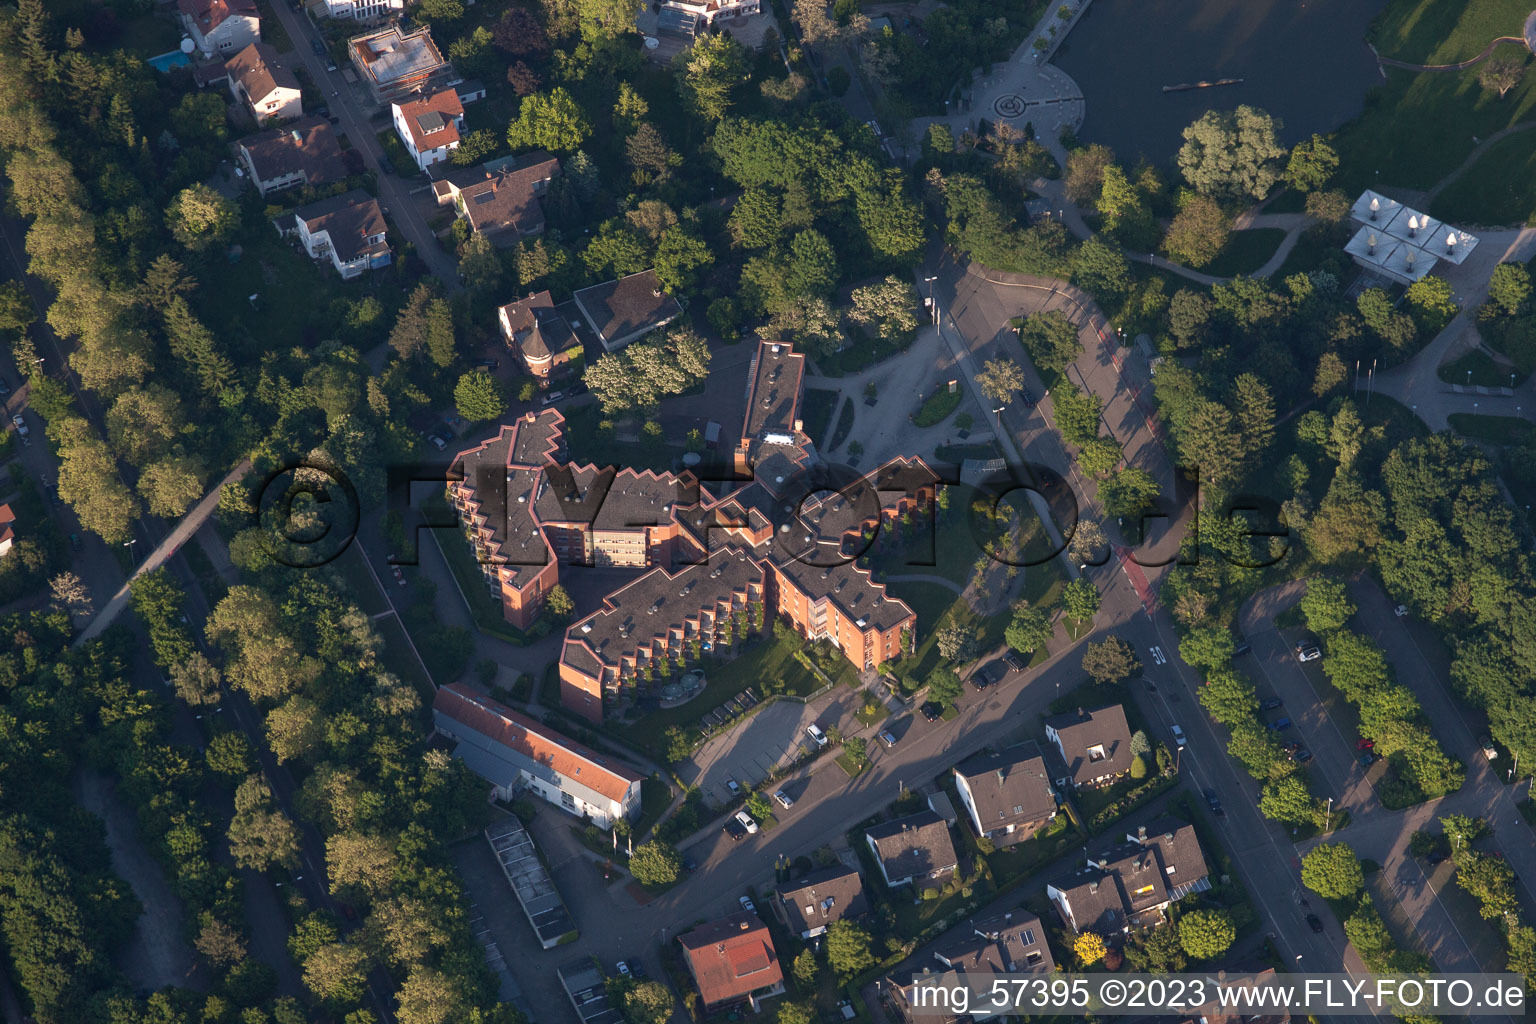 Aerial photograpy of Caritas senior center at Horbachpark in Ettlingen in the state Baden-Wuerttemberg, Germany